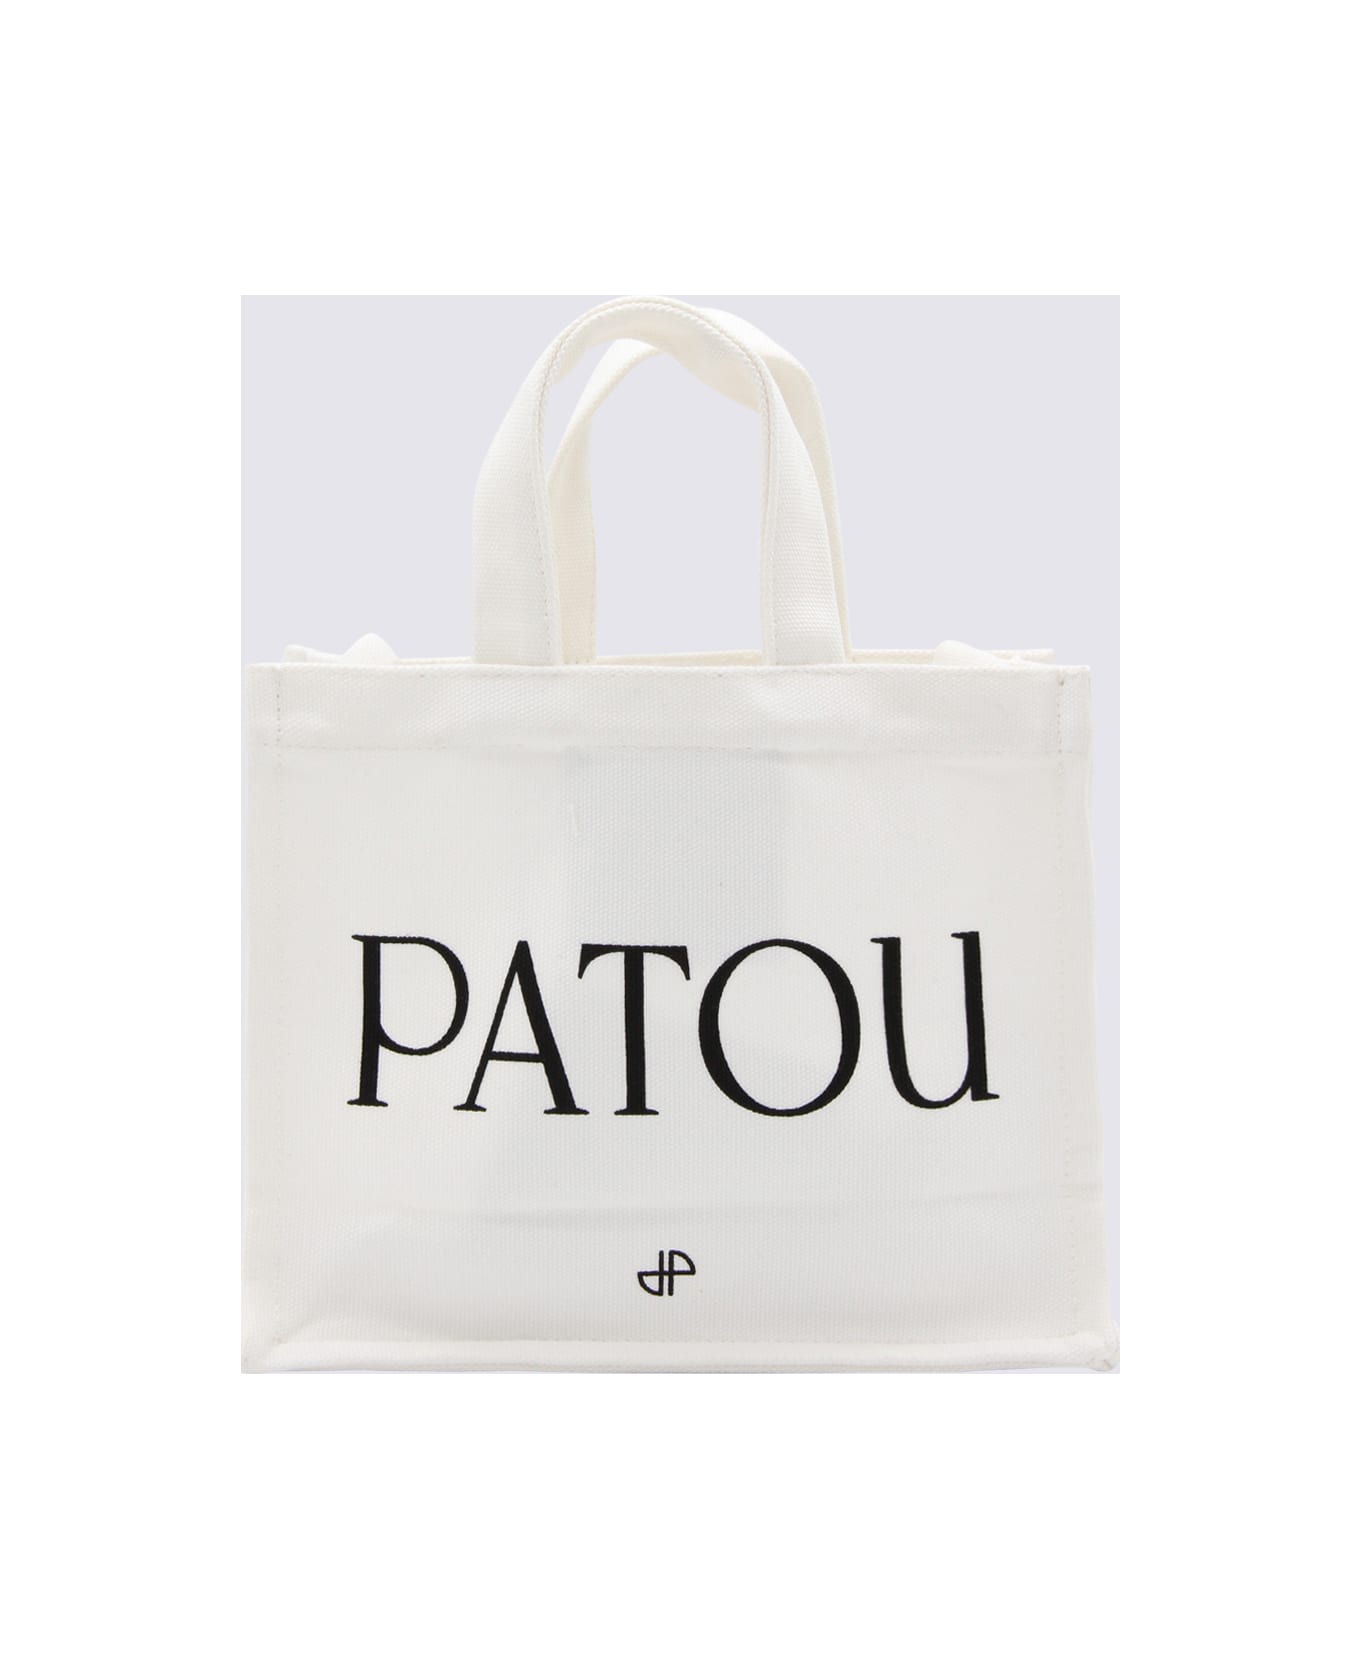 Patou White And Black Canvas Tote Bag - White